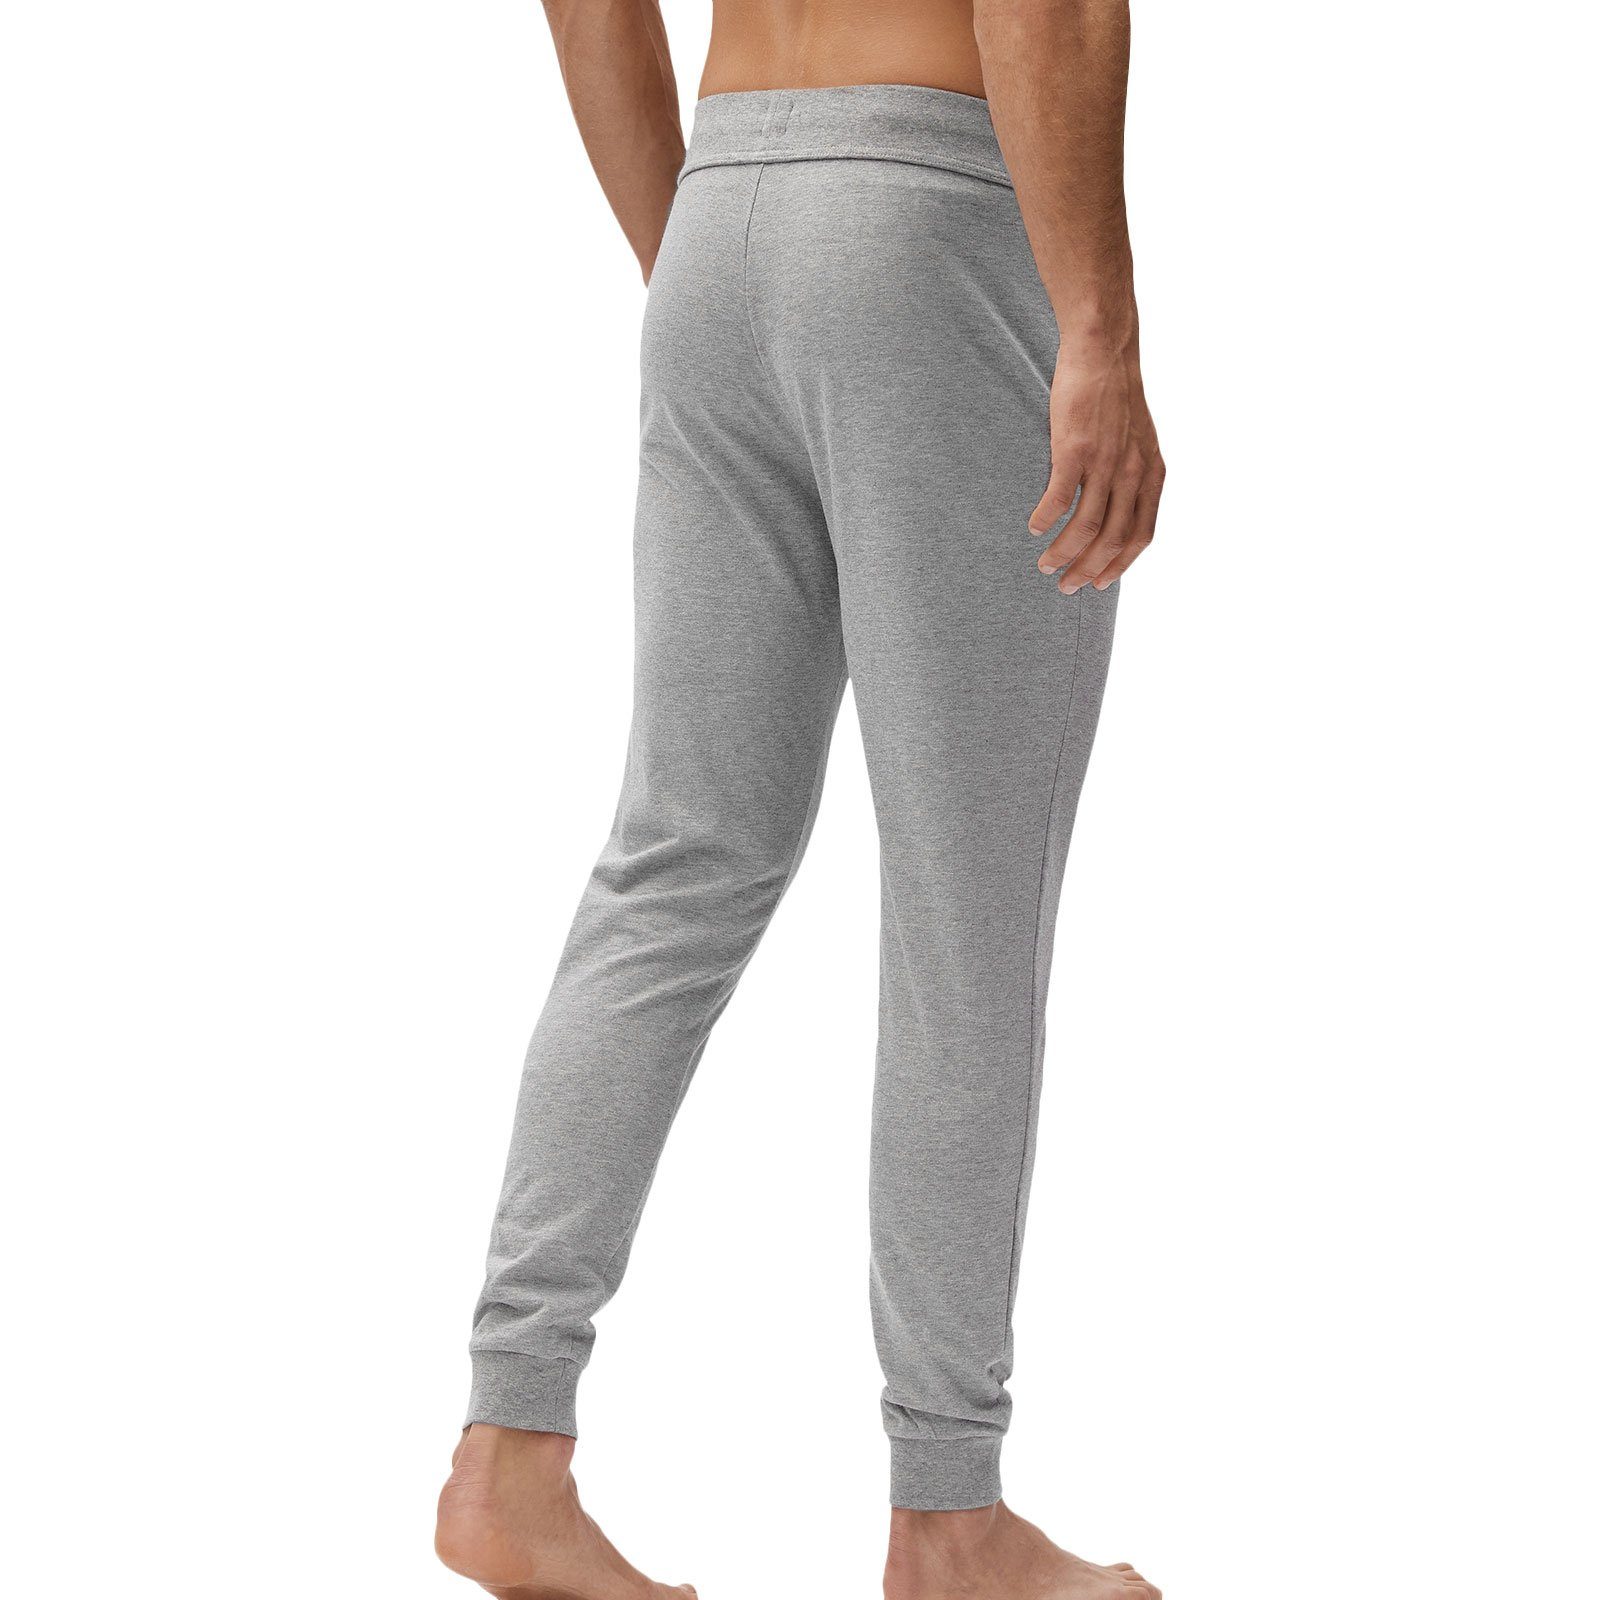 Bundhöhe BOSS Authentic grey Pants medium 033 mit mittlerer Jogginghose